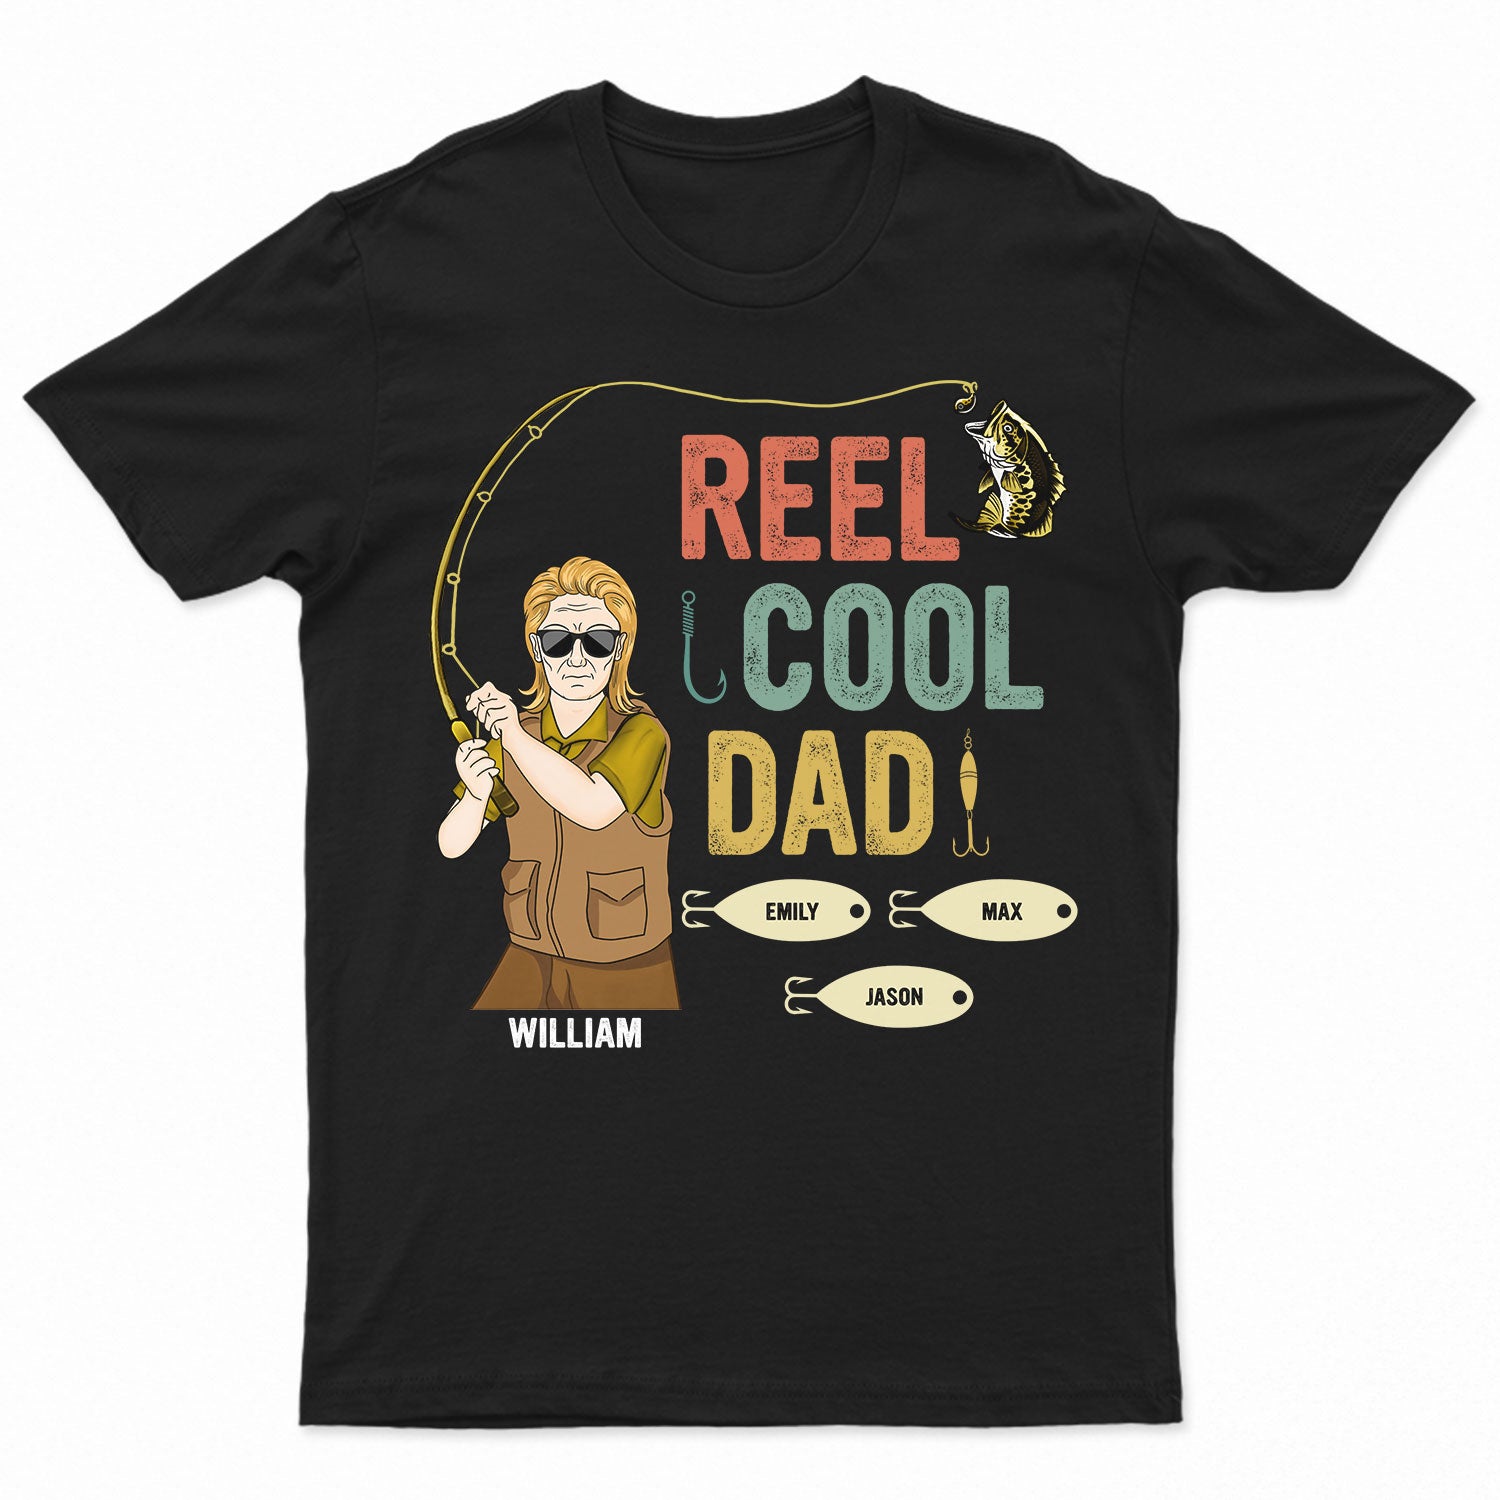 Reel Cool Dad - Birthday, Family Gift for Father, Grandpa, Husband, Fishers, Fishing Lovers - Personalized Custom T Shirt T-Shirt / Tshirt Black / S